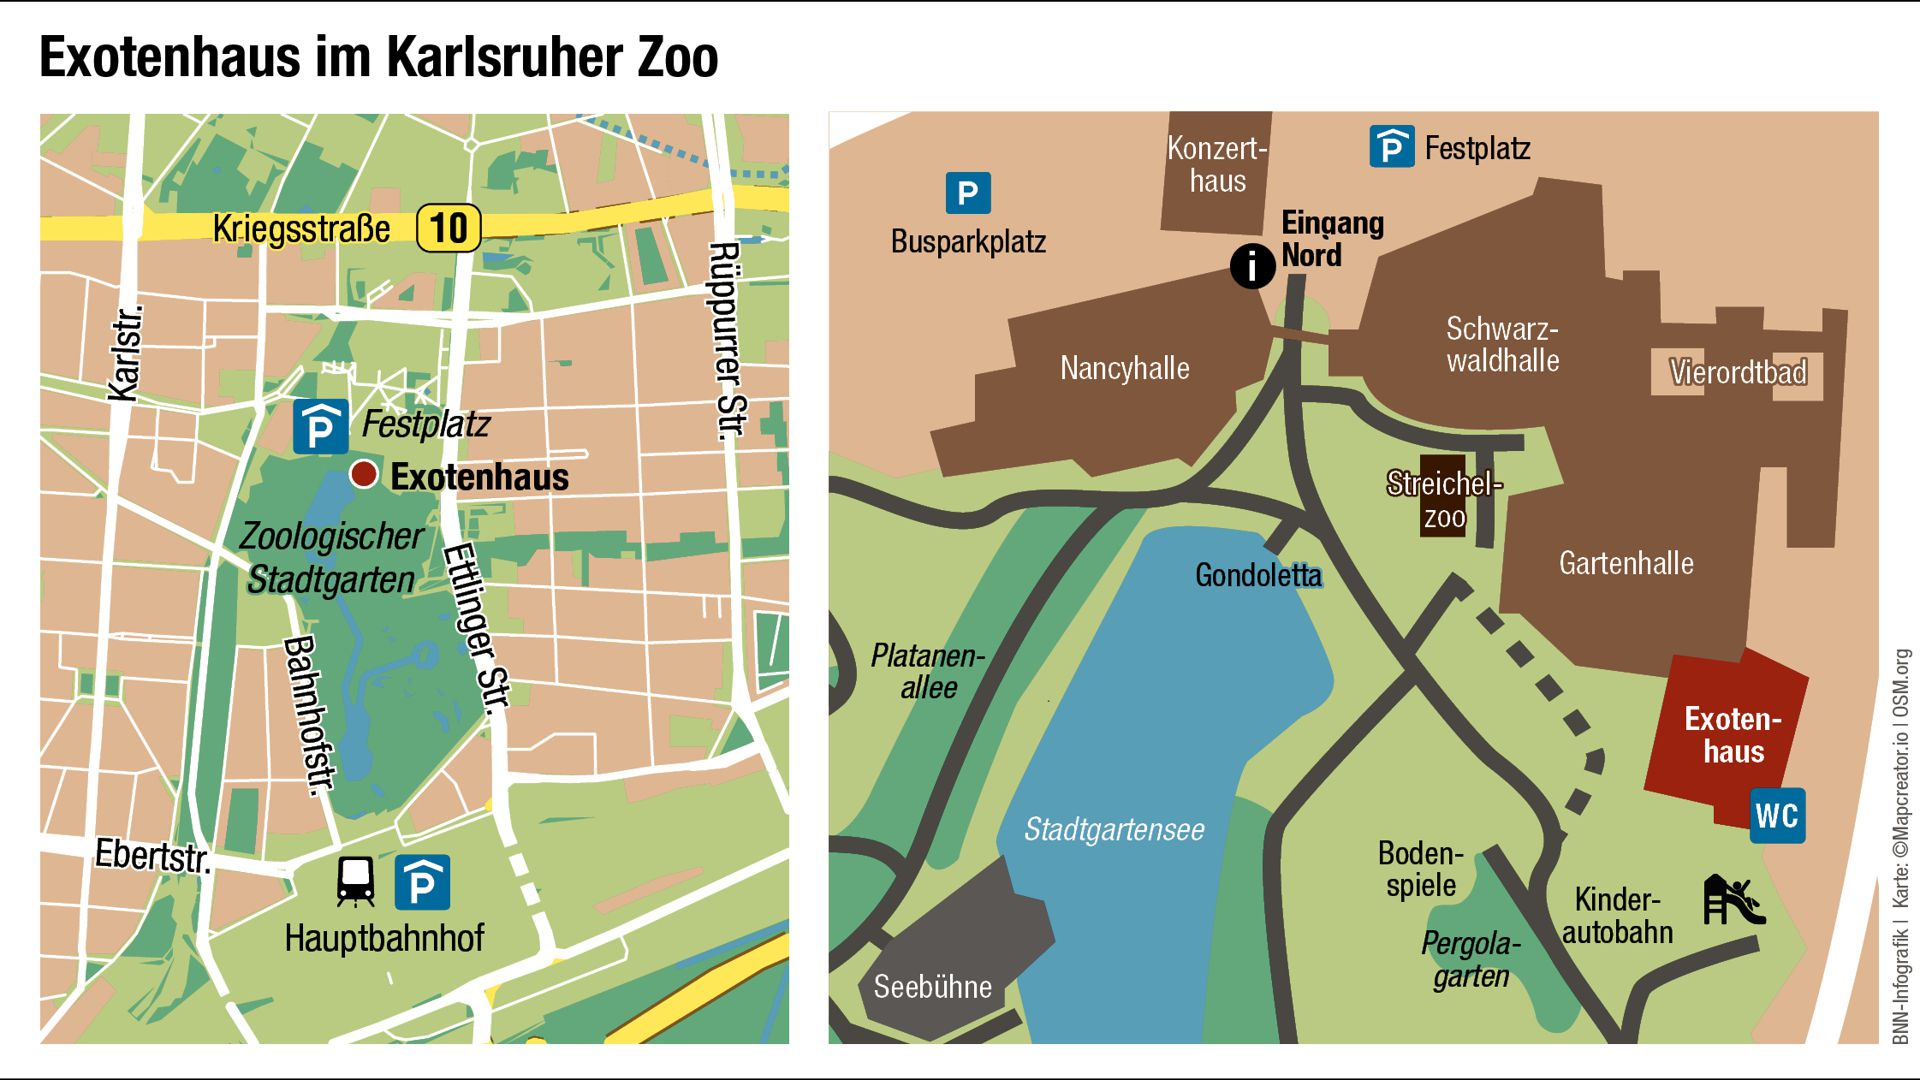 Exotenhaus im Karlsruher Zoo